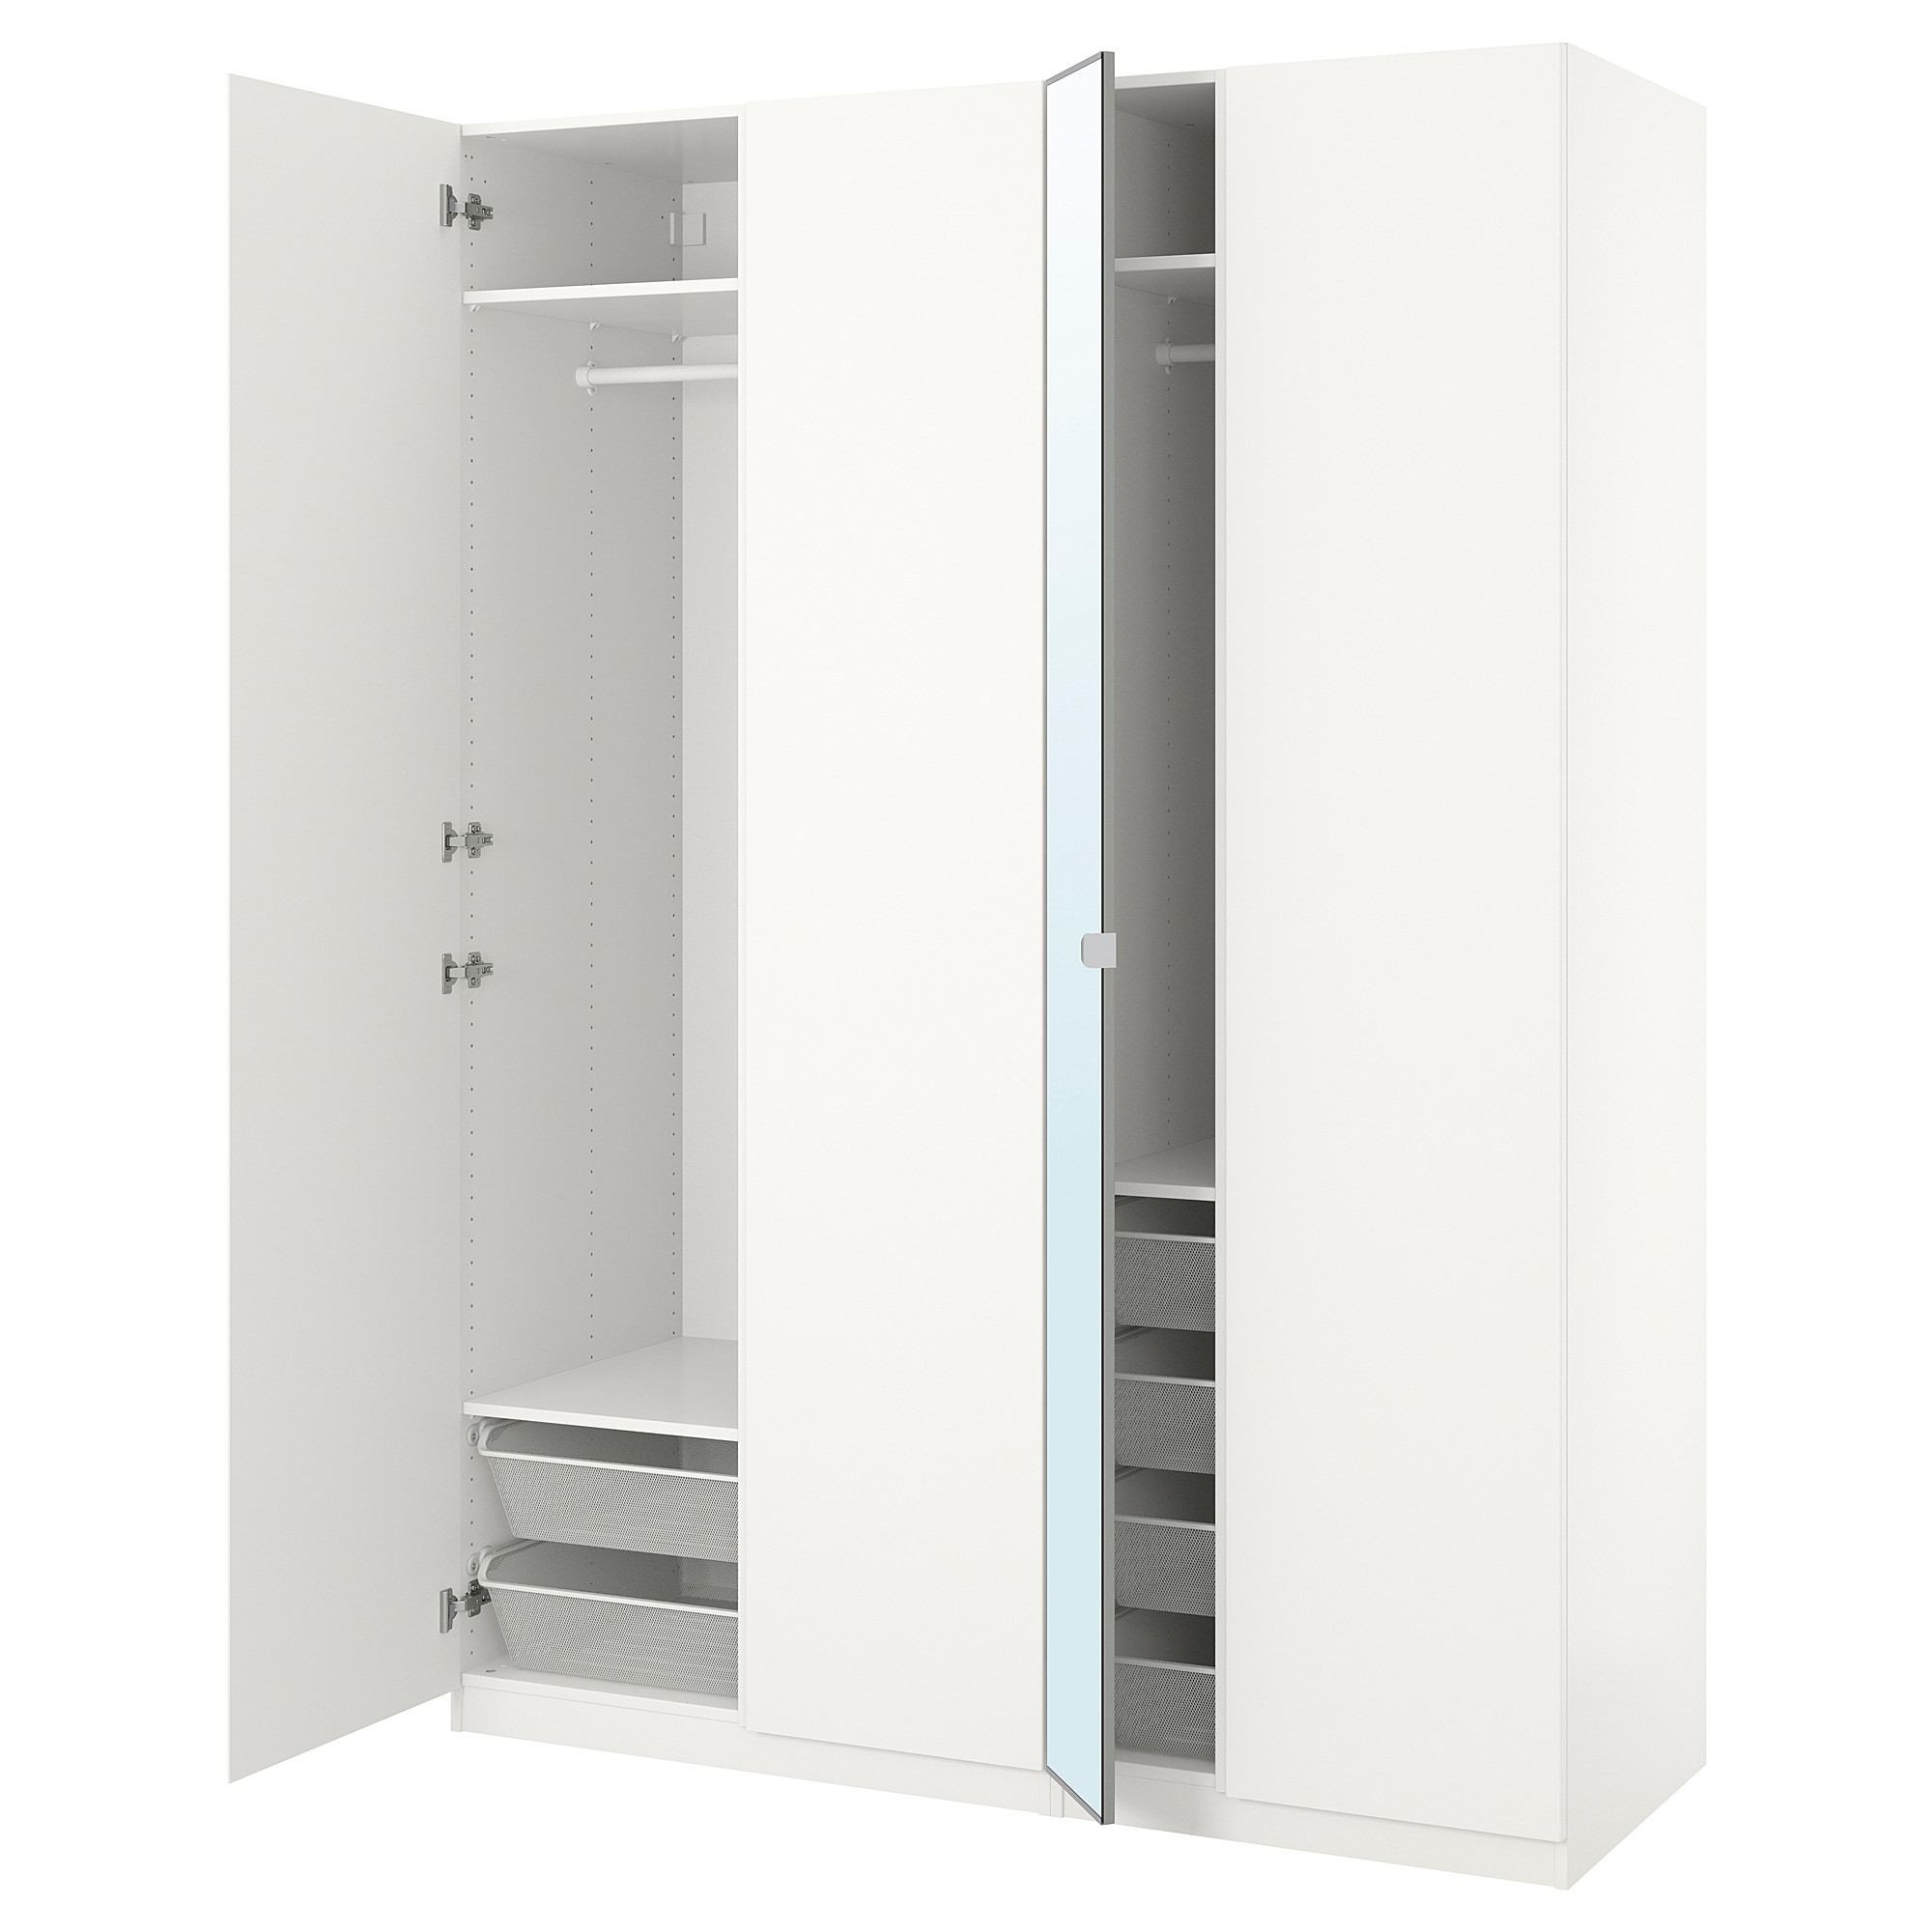 Lockers for Bedroom Storage Inspirational Ikea Pax White Vikanes Vikedal Wardrobe